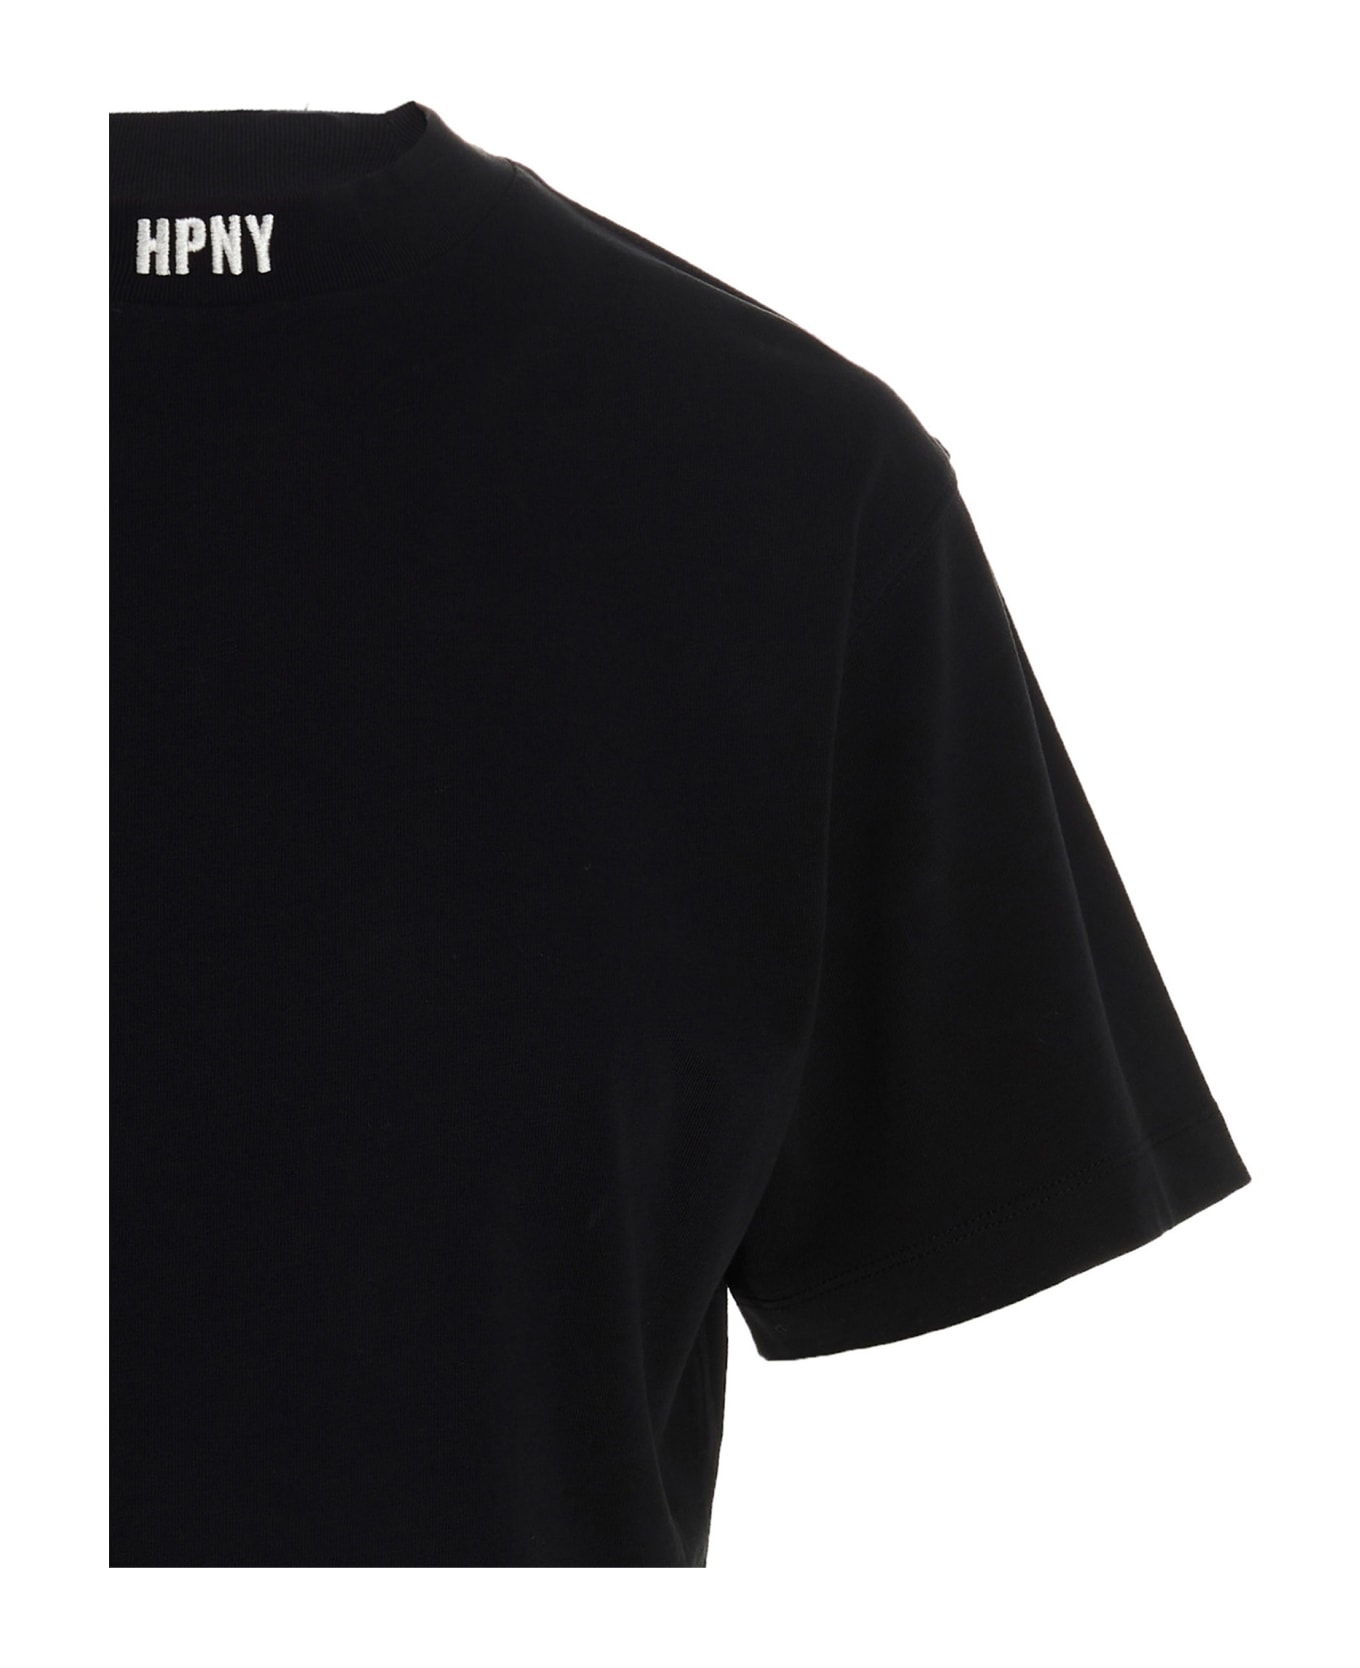 HERON PRESTON 'hpny' Cropped T-shirt - White/Black Tシャツ